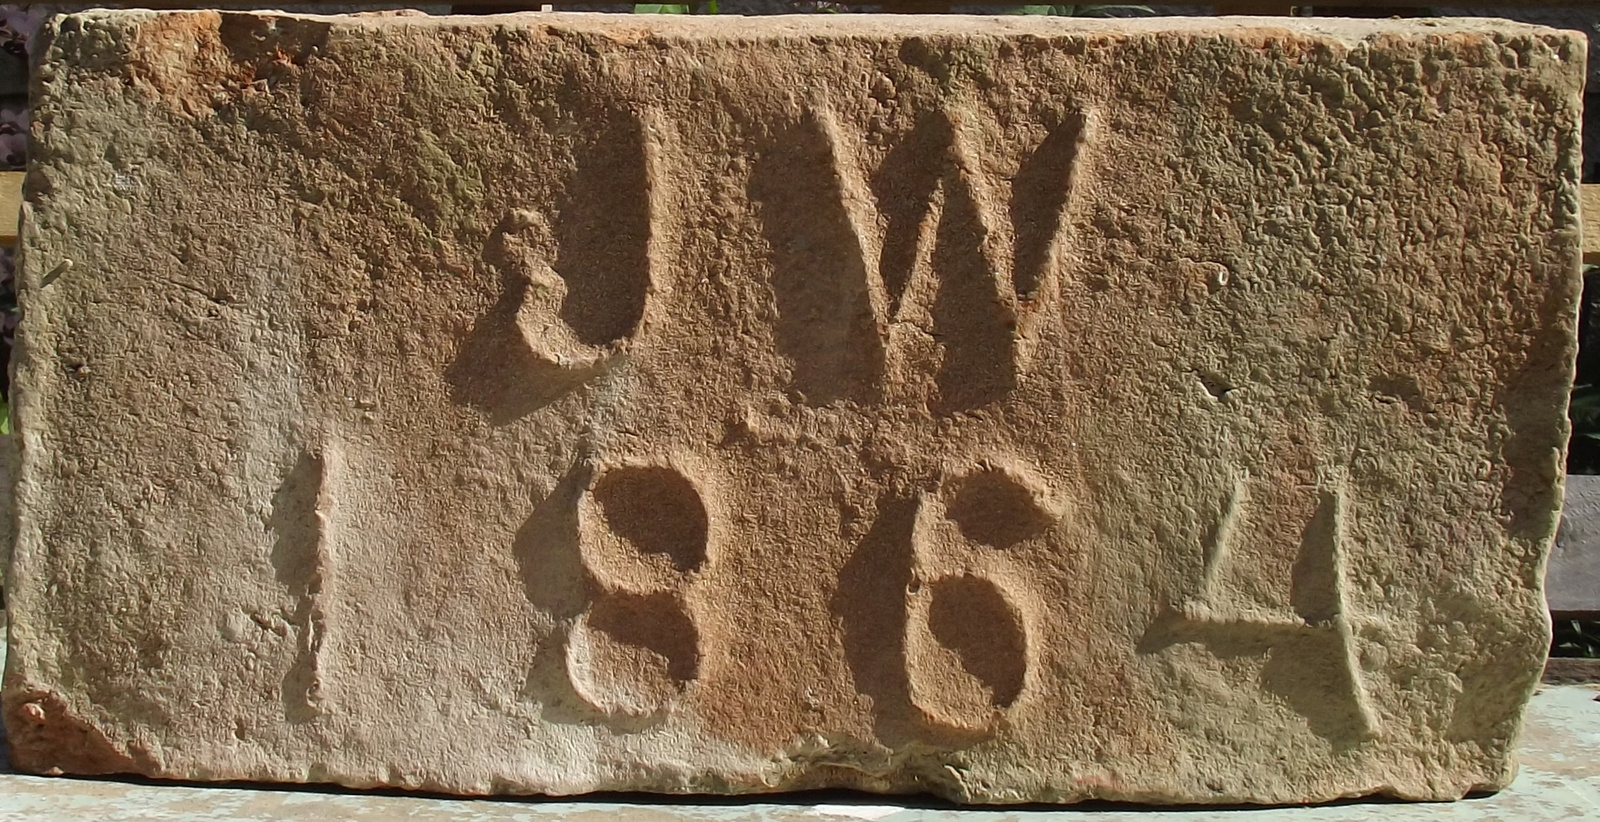 JW 1864